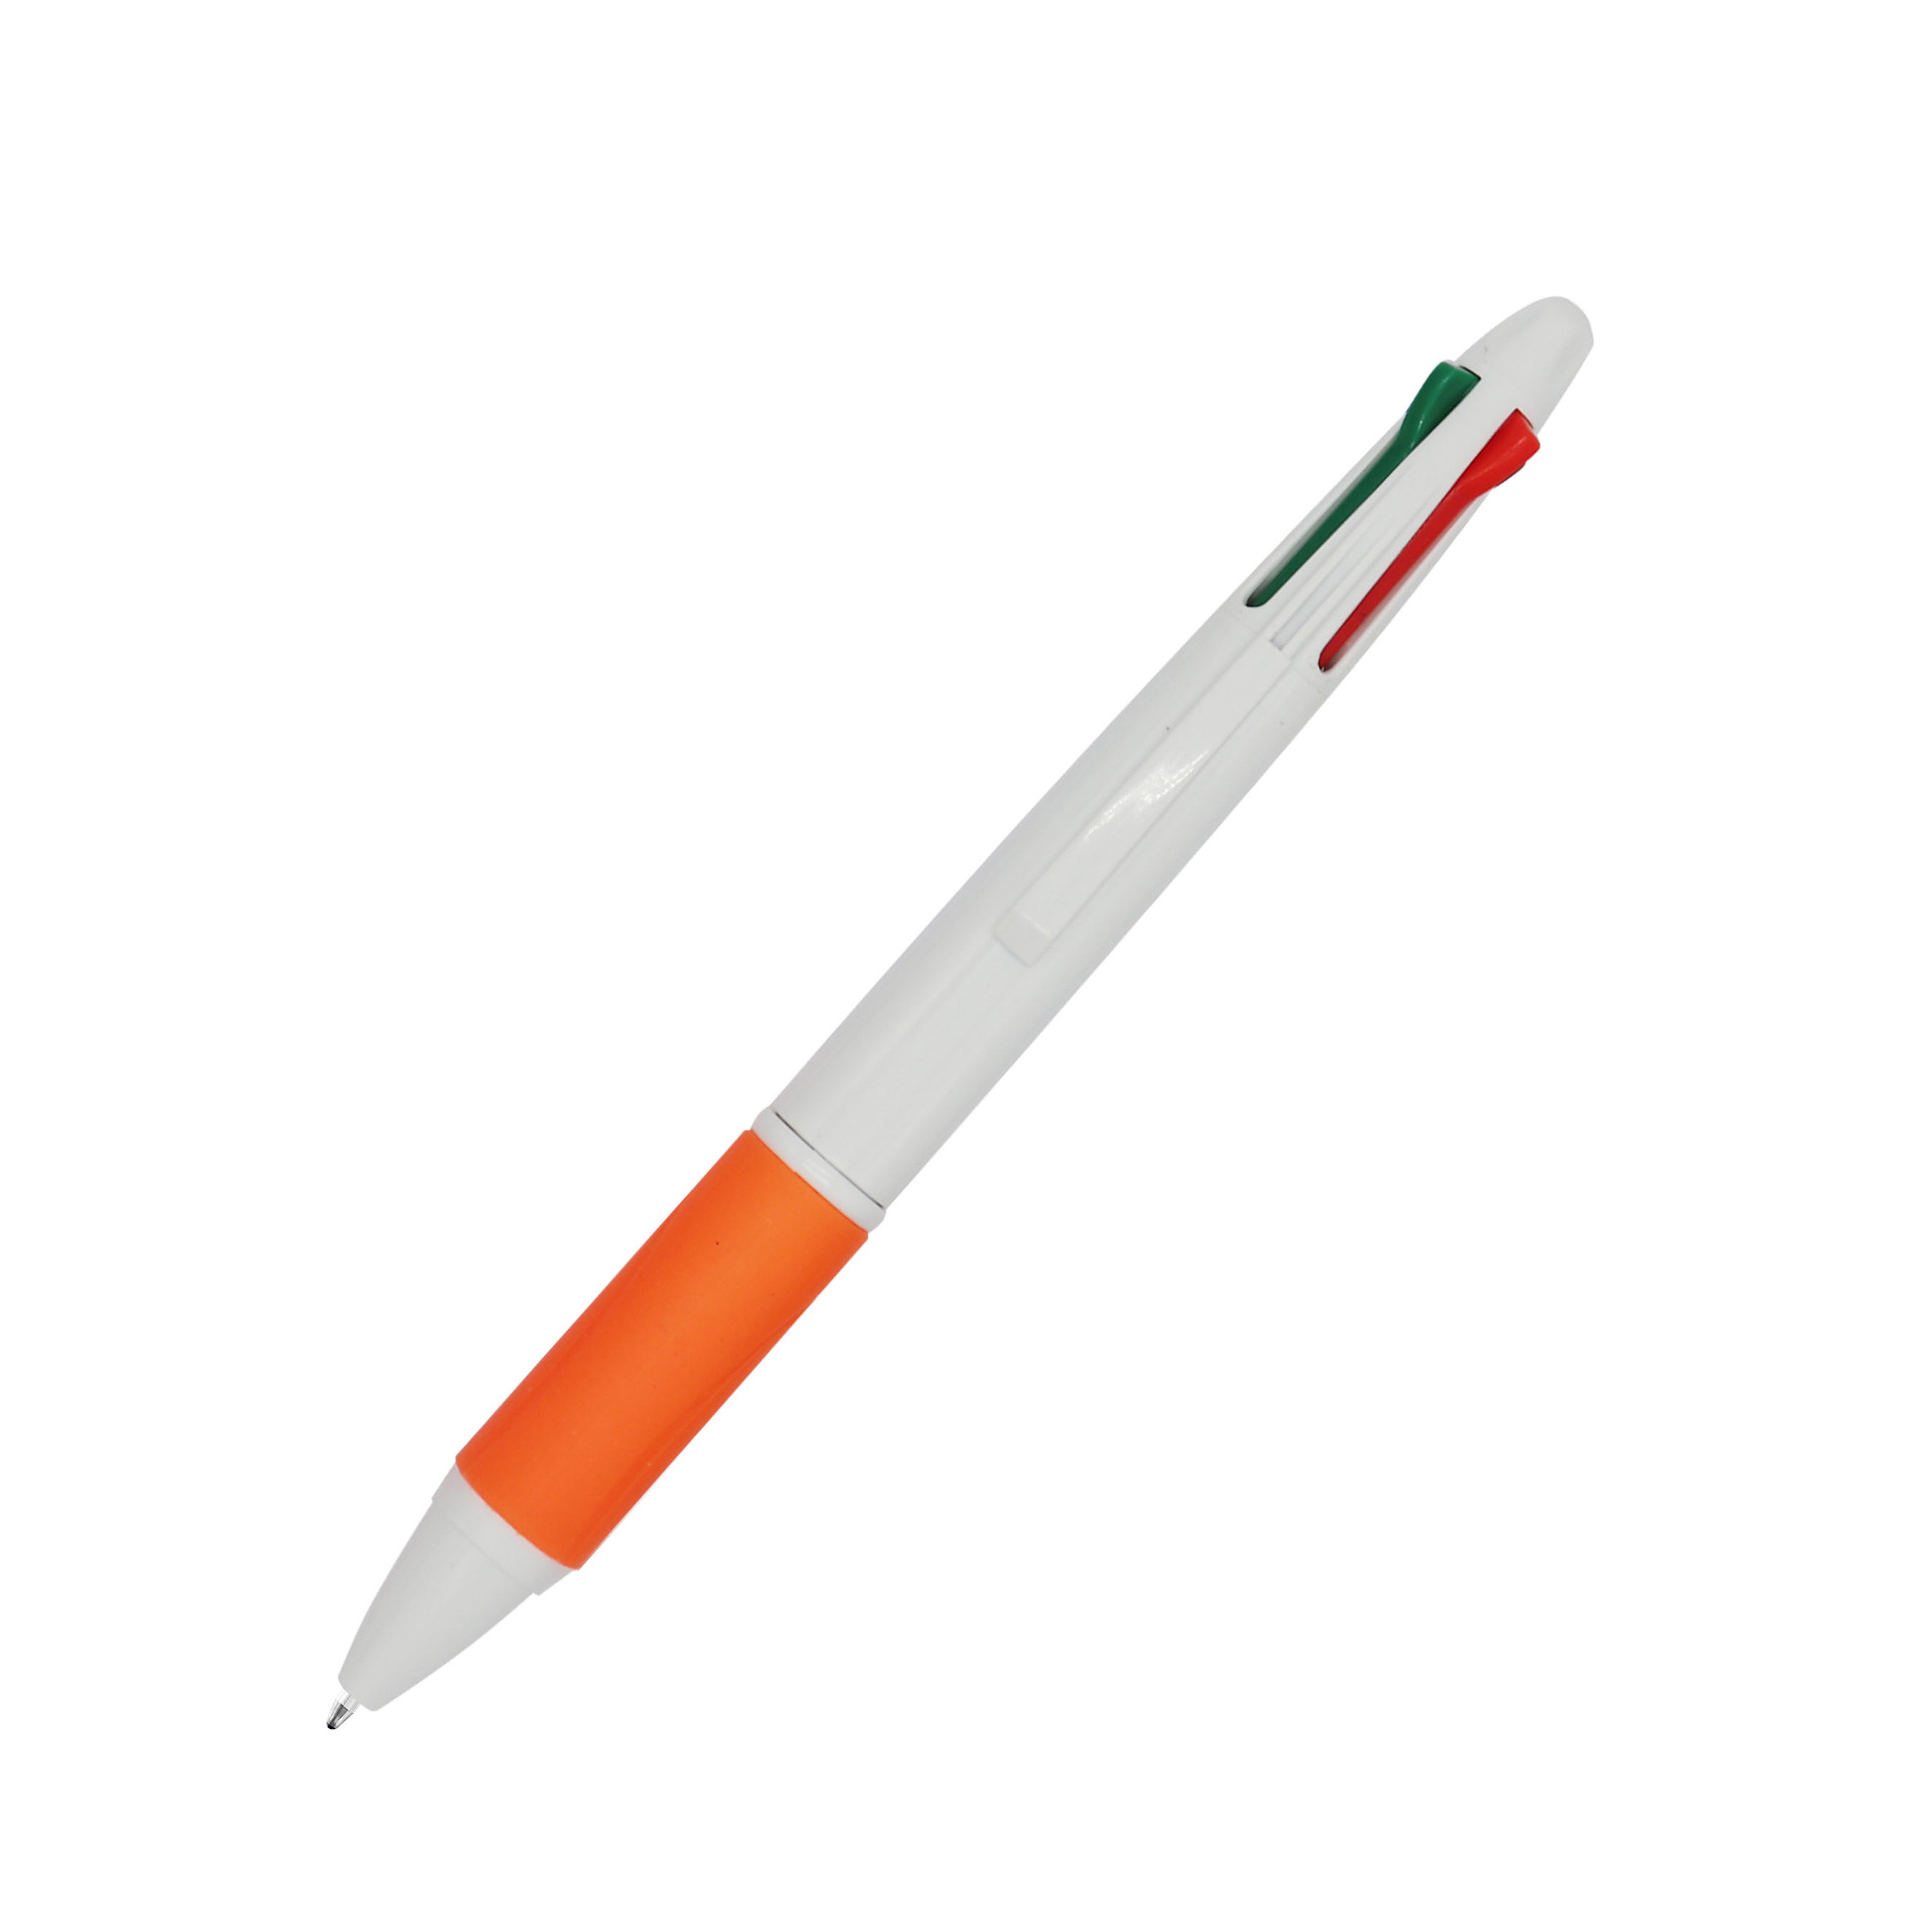 OS-0246 4 color ink pens